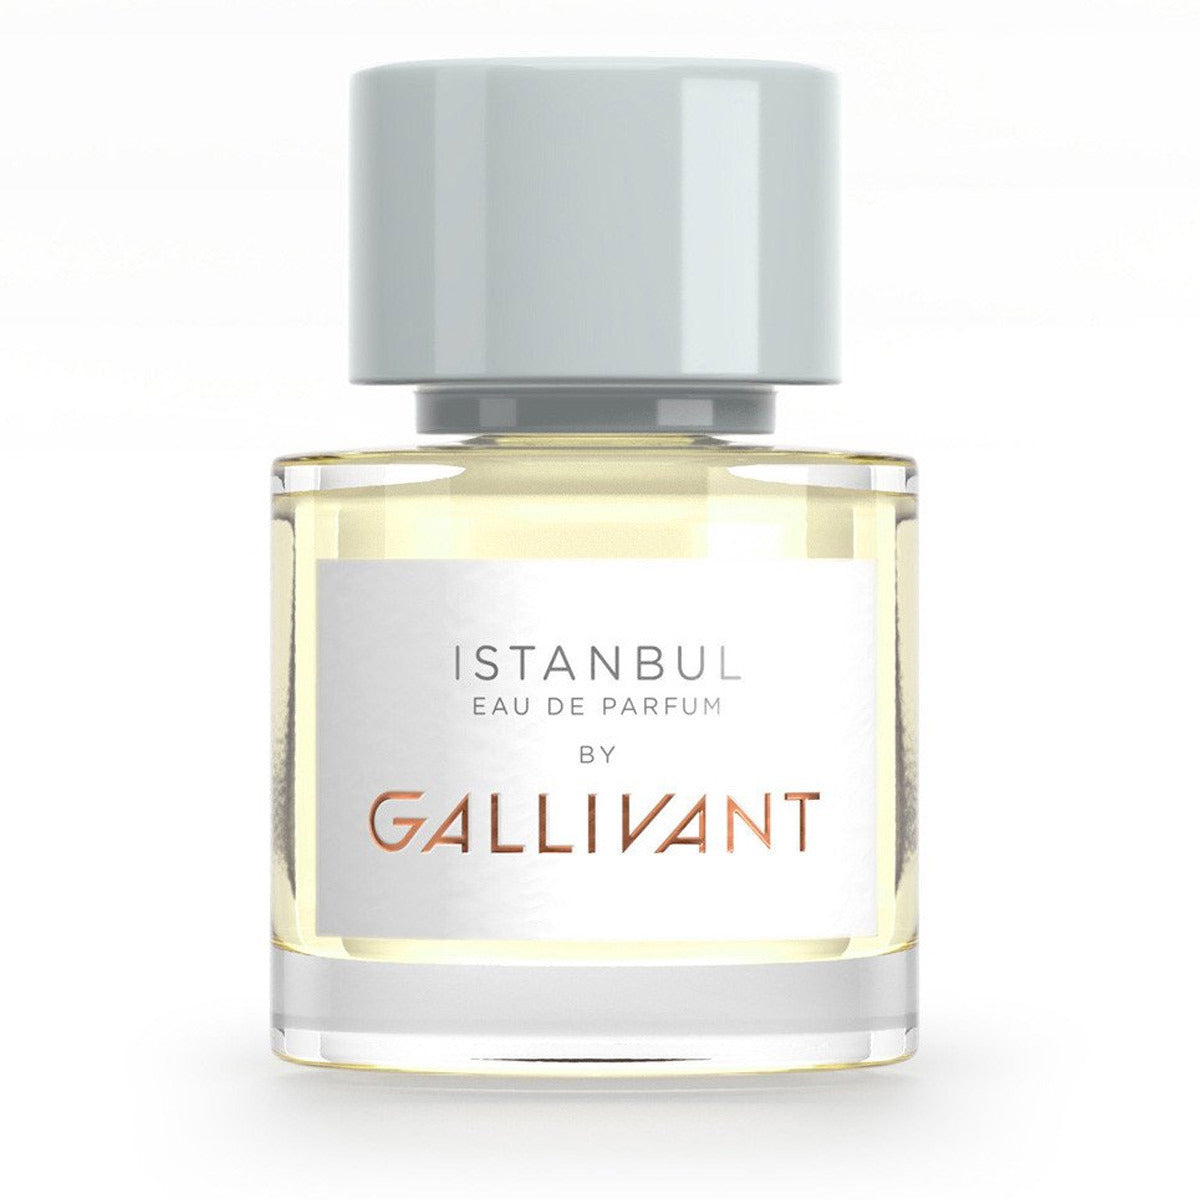 Primary image of Istanbul Eau de Parfum